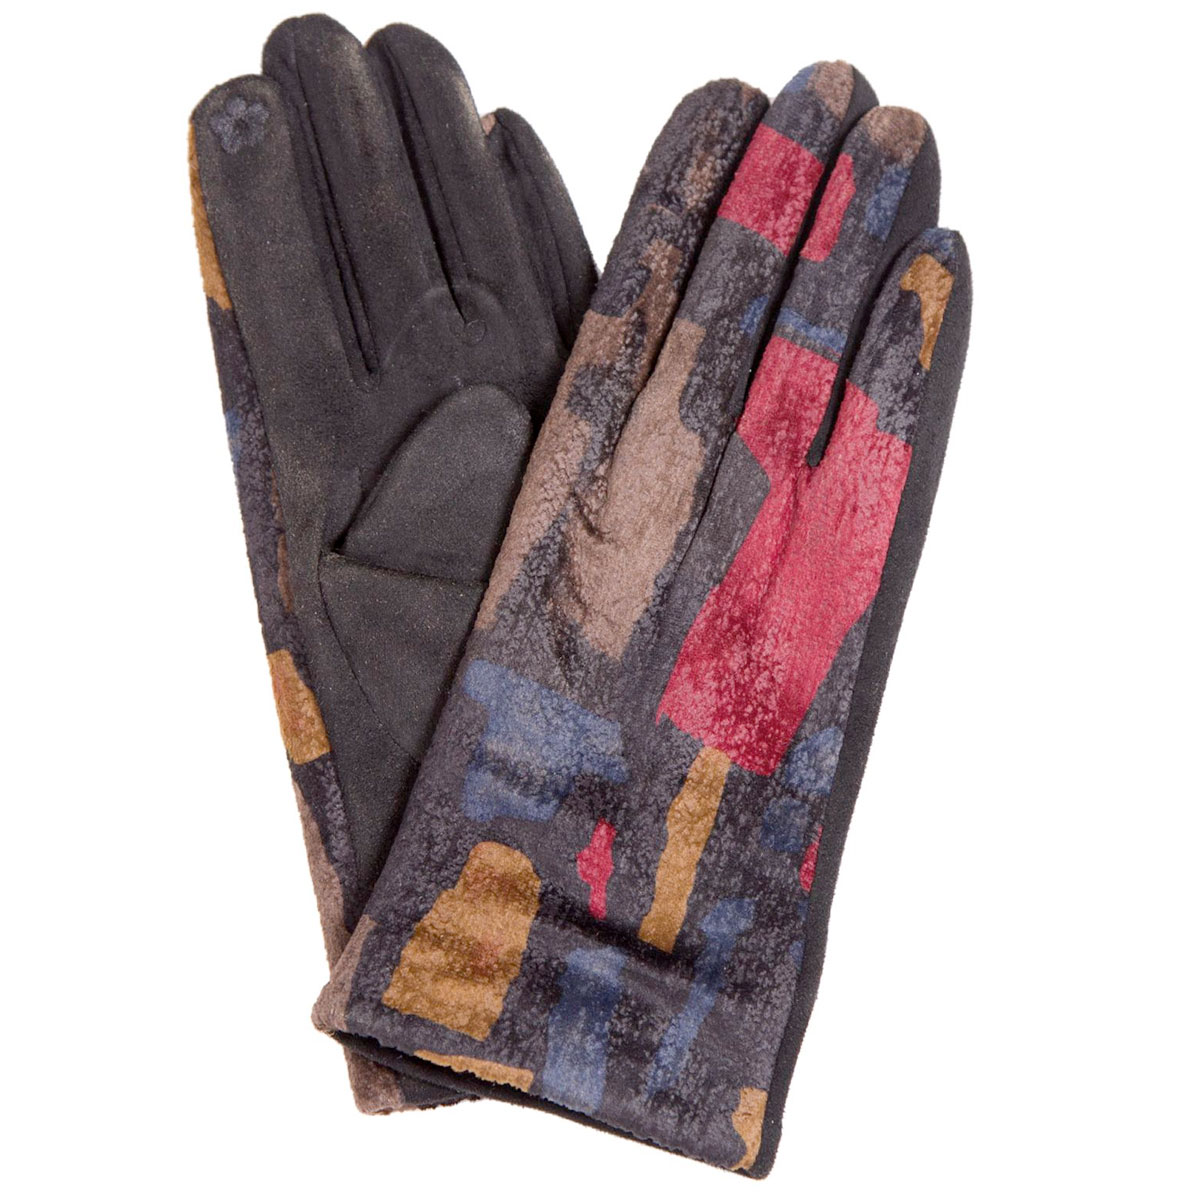 840-BK Sueded Abstract Design Smart Gloves (Black Palms)